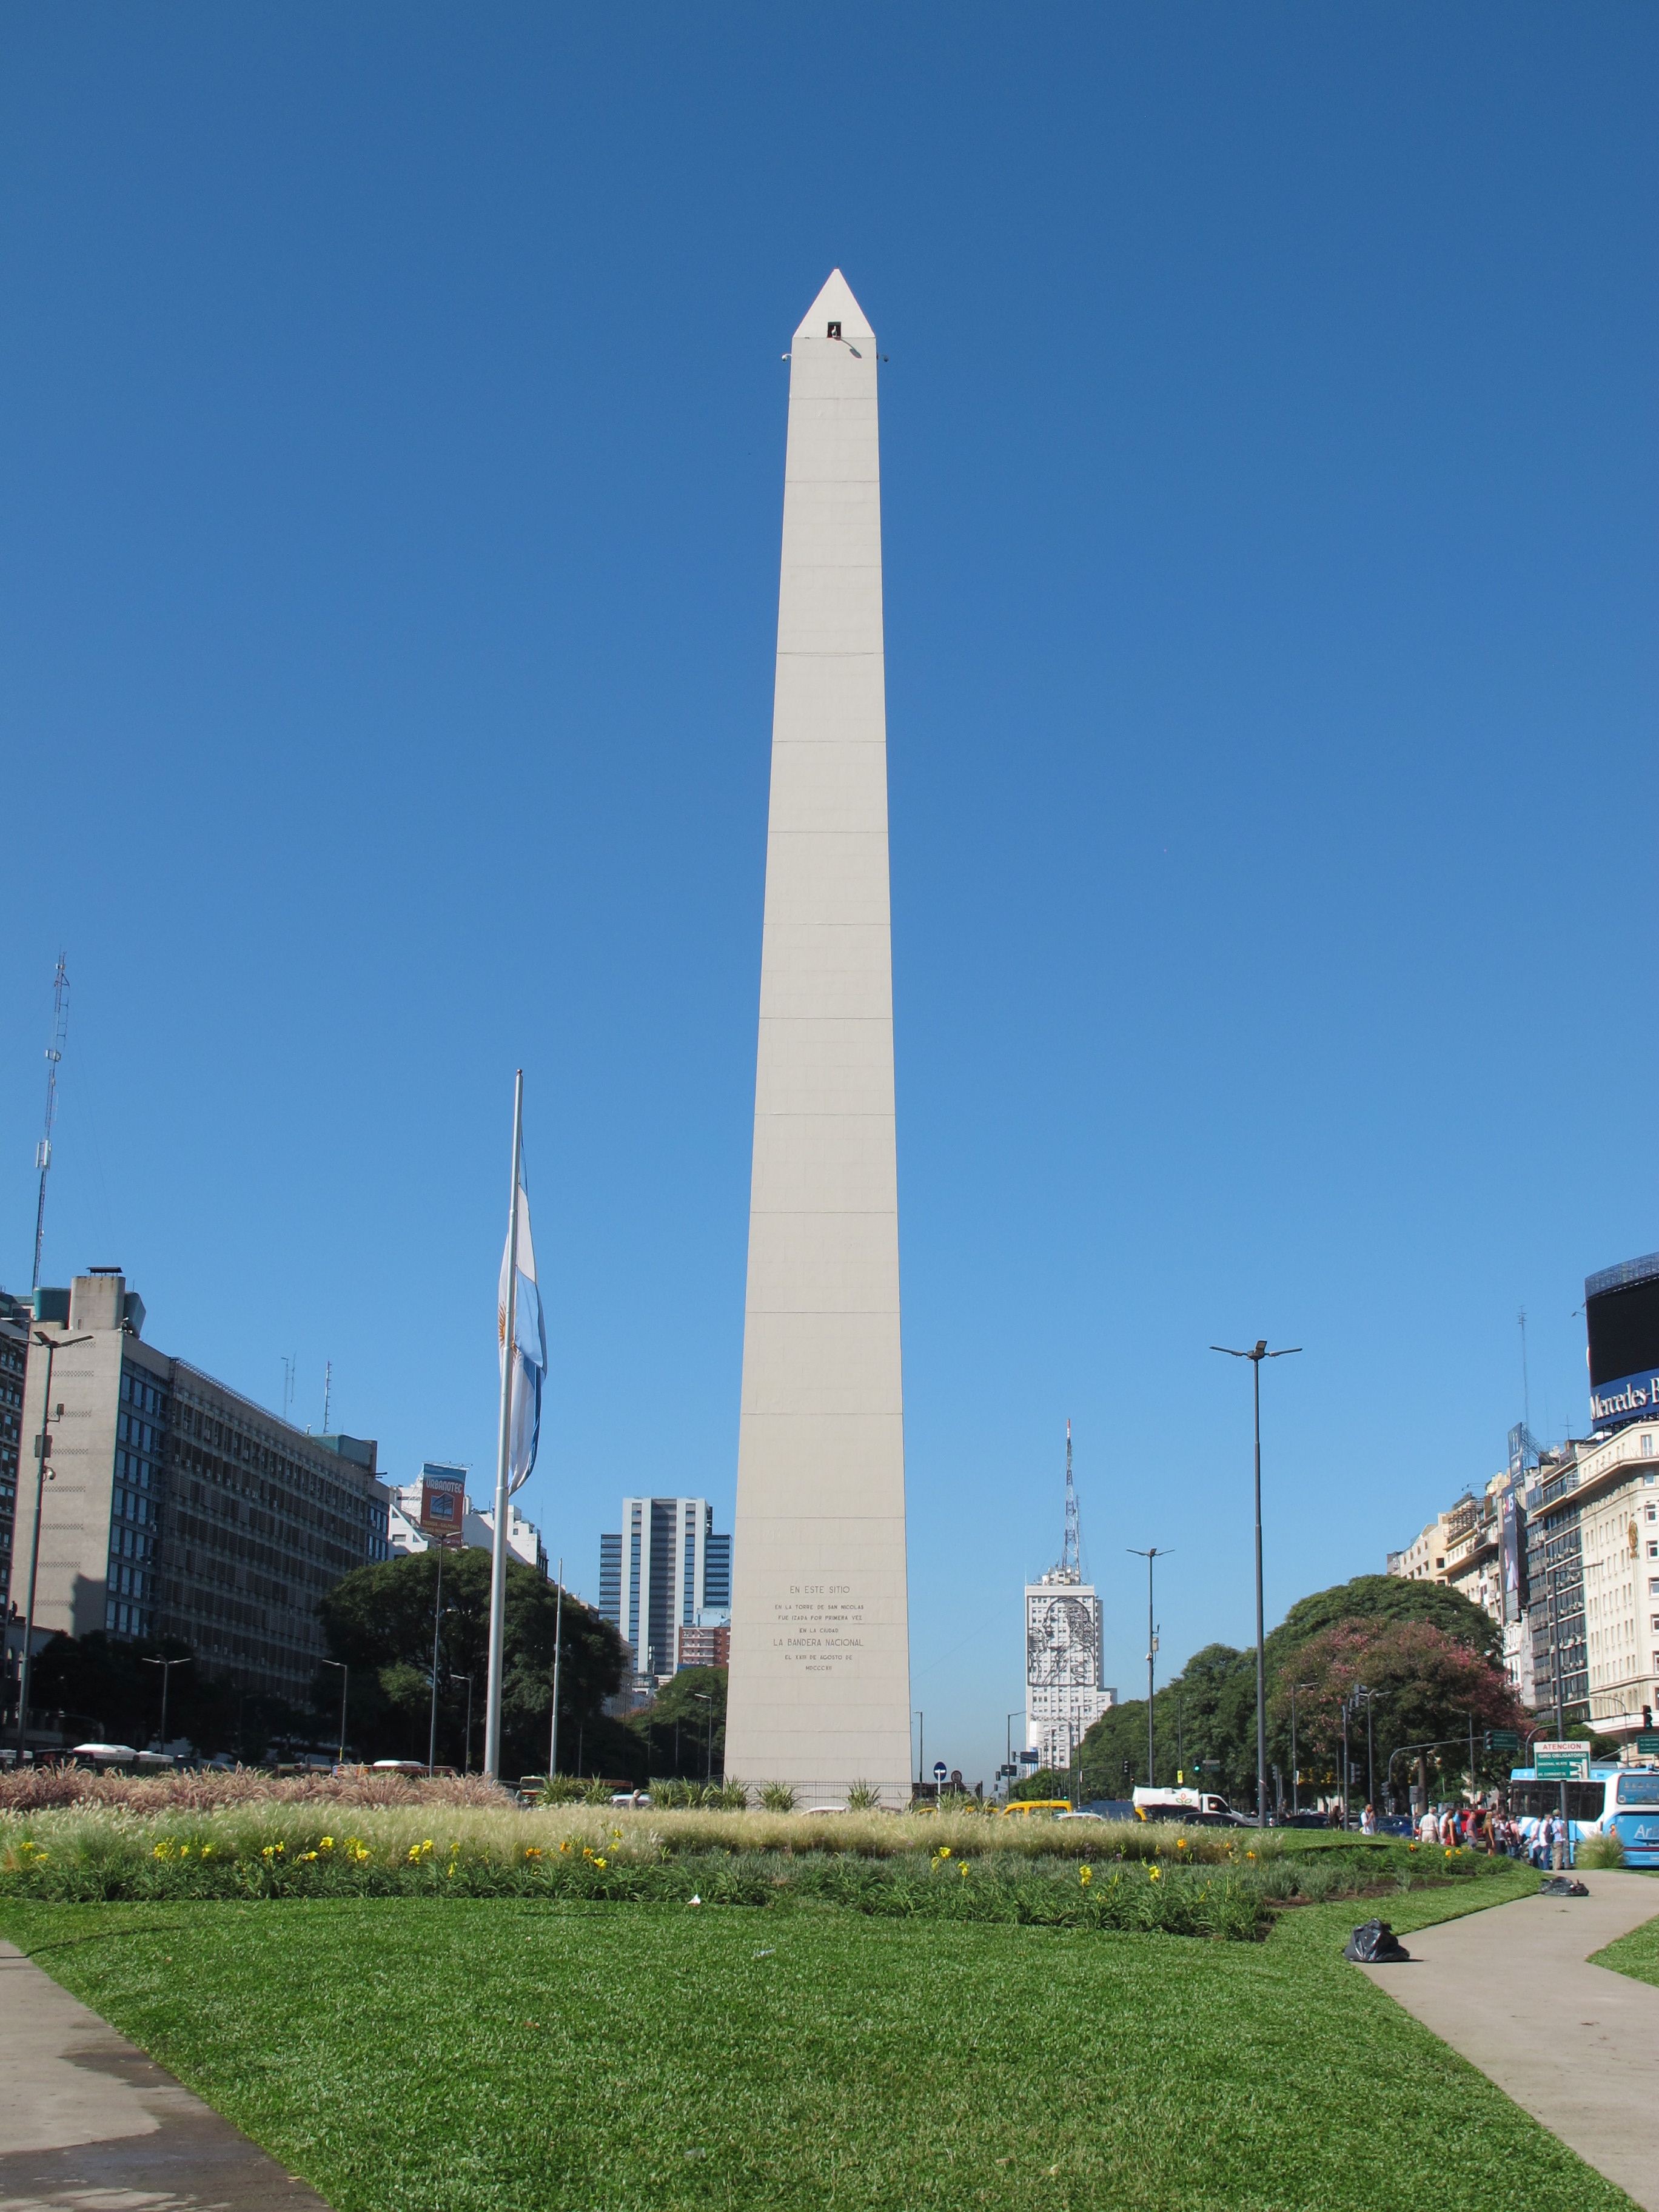 File:Buenos Aires Obelisk 4.jpg - Wikimedia Commons